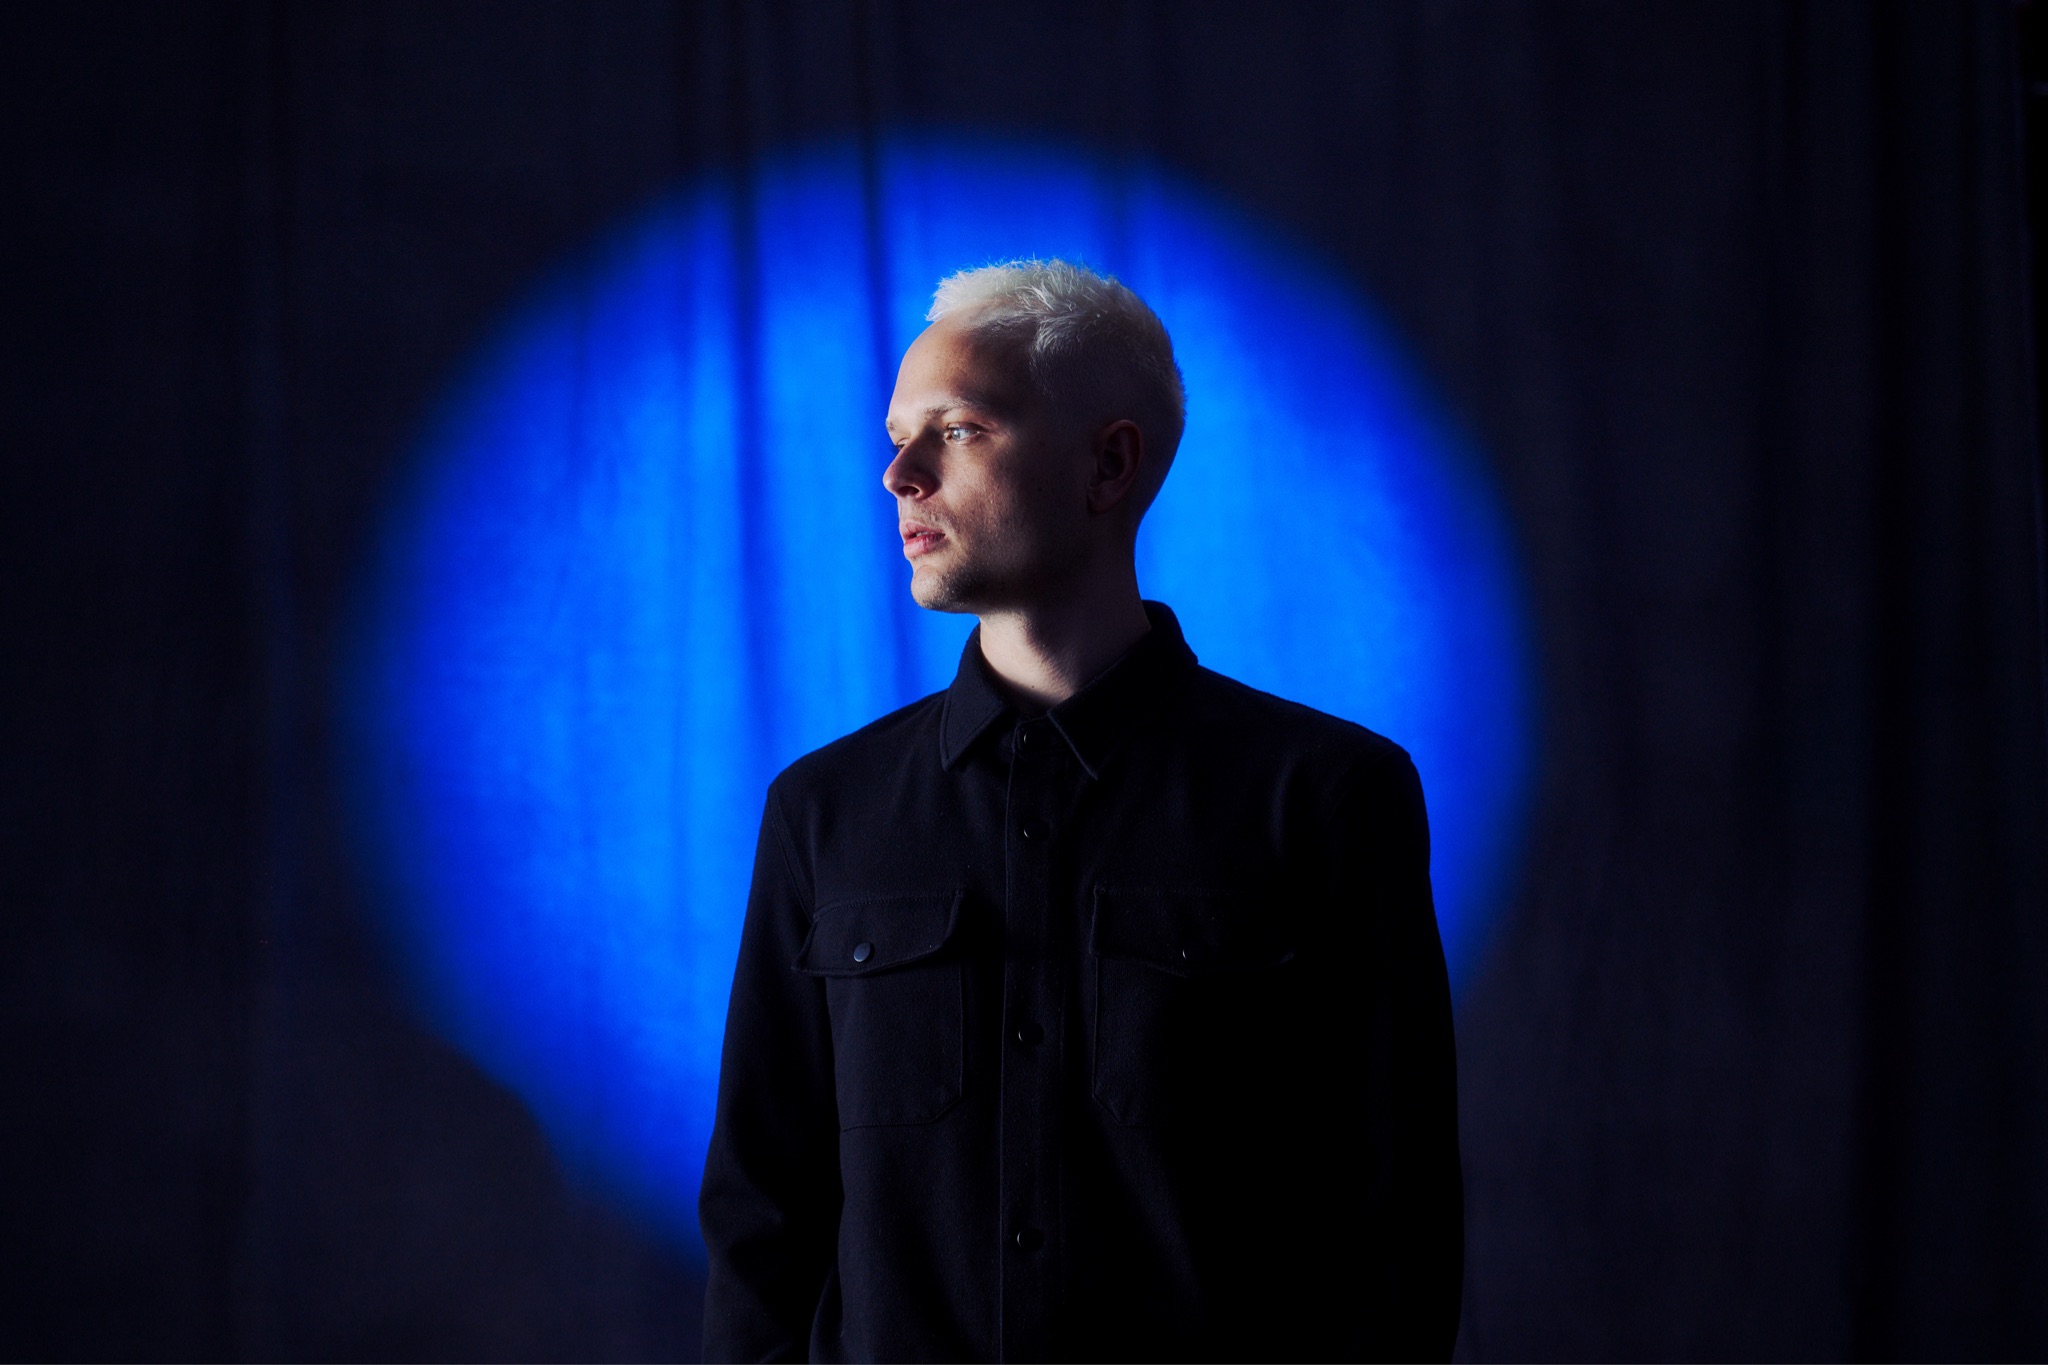 Moritz Hofbauer releases debut album “In A Blurry World” on Boris Brejcha’s label Fckng Serious